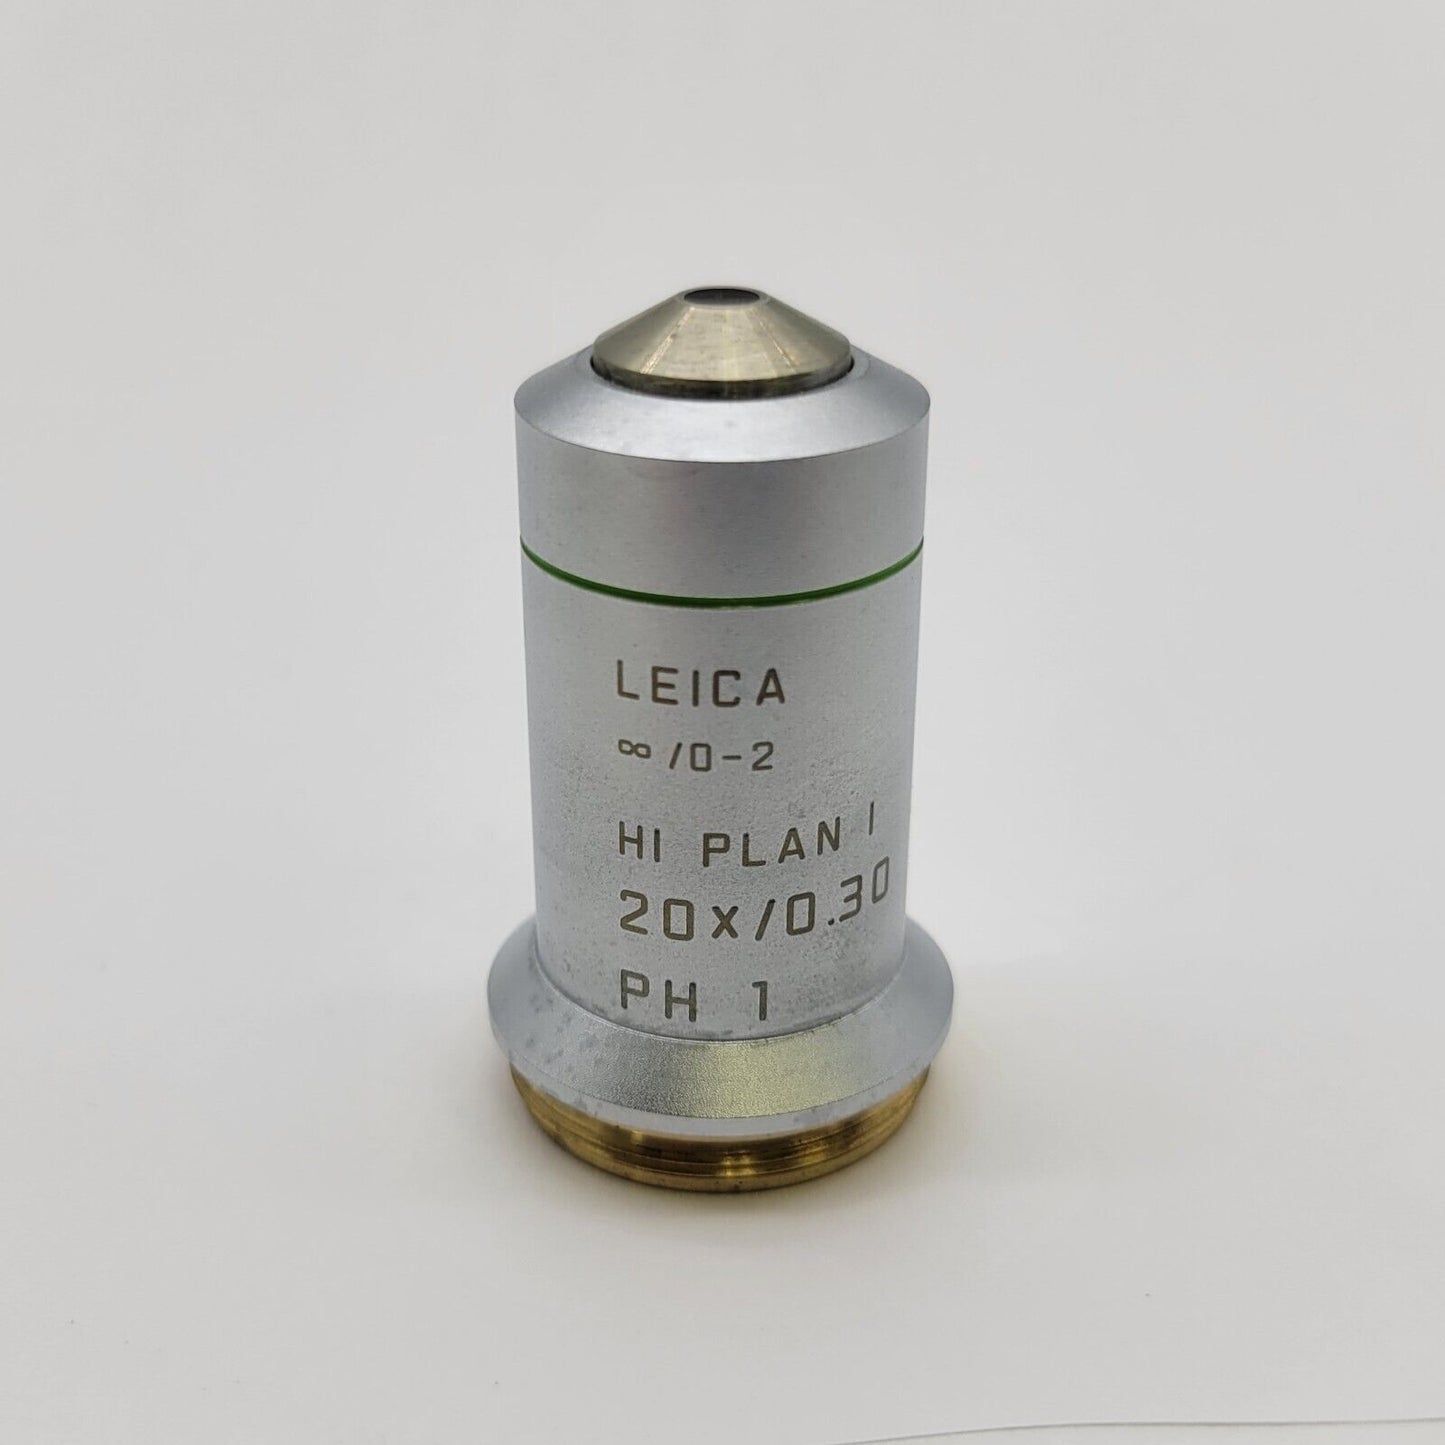 Leica Microscope Objective HI Plan I 20x Ph1 ∞/0-2  506272  20x/0.30 - microscopemarketplace